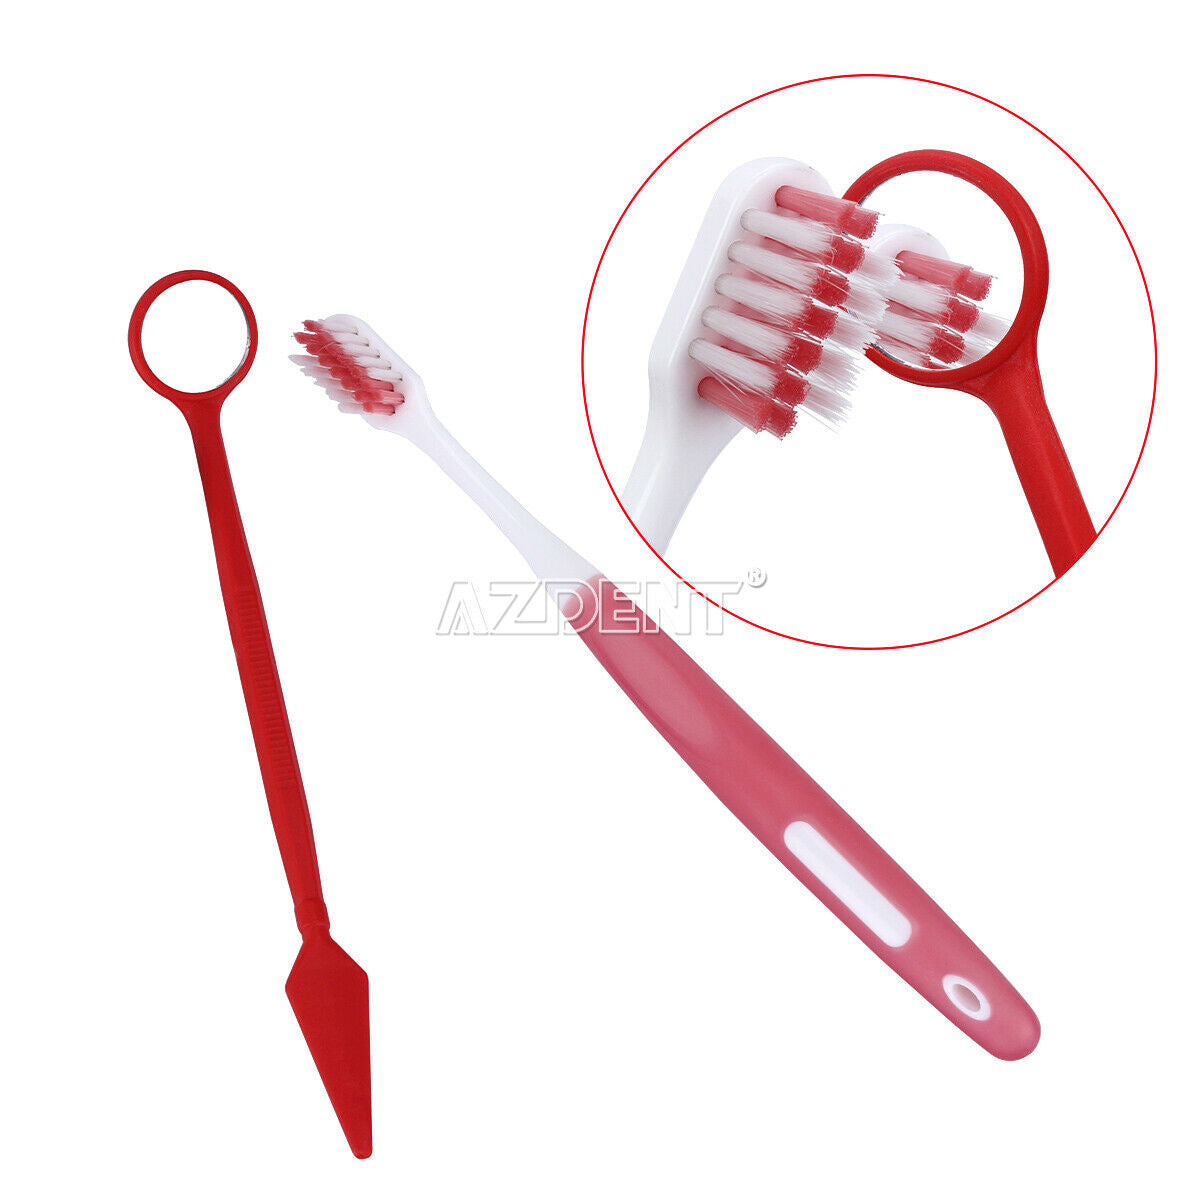 20Kits Dental Orthodontic Brush Ties Toothbrush Floss Oral Care Kit AZDENT